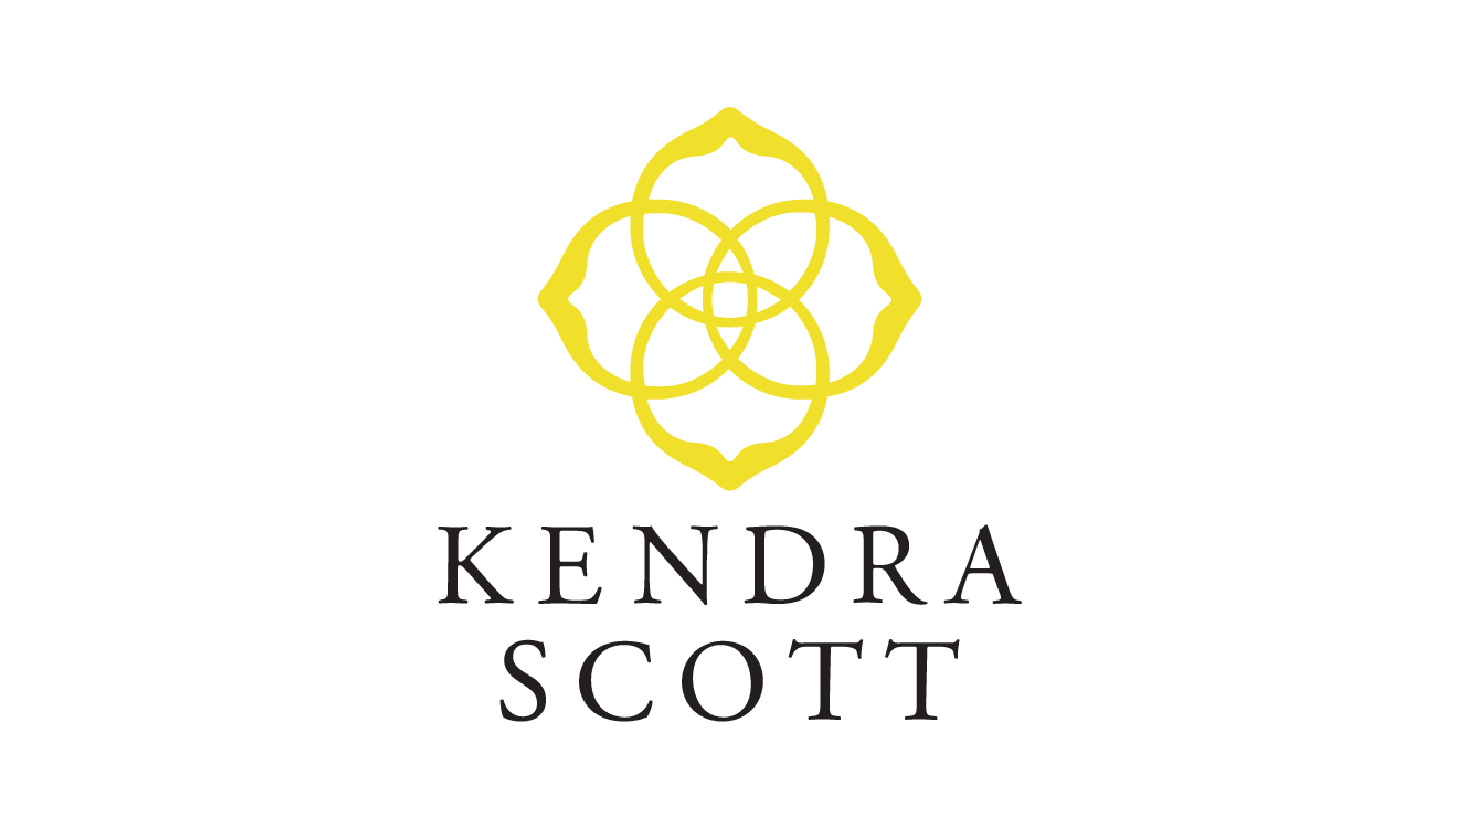 Cedar&spice Client Kendra Scott